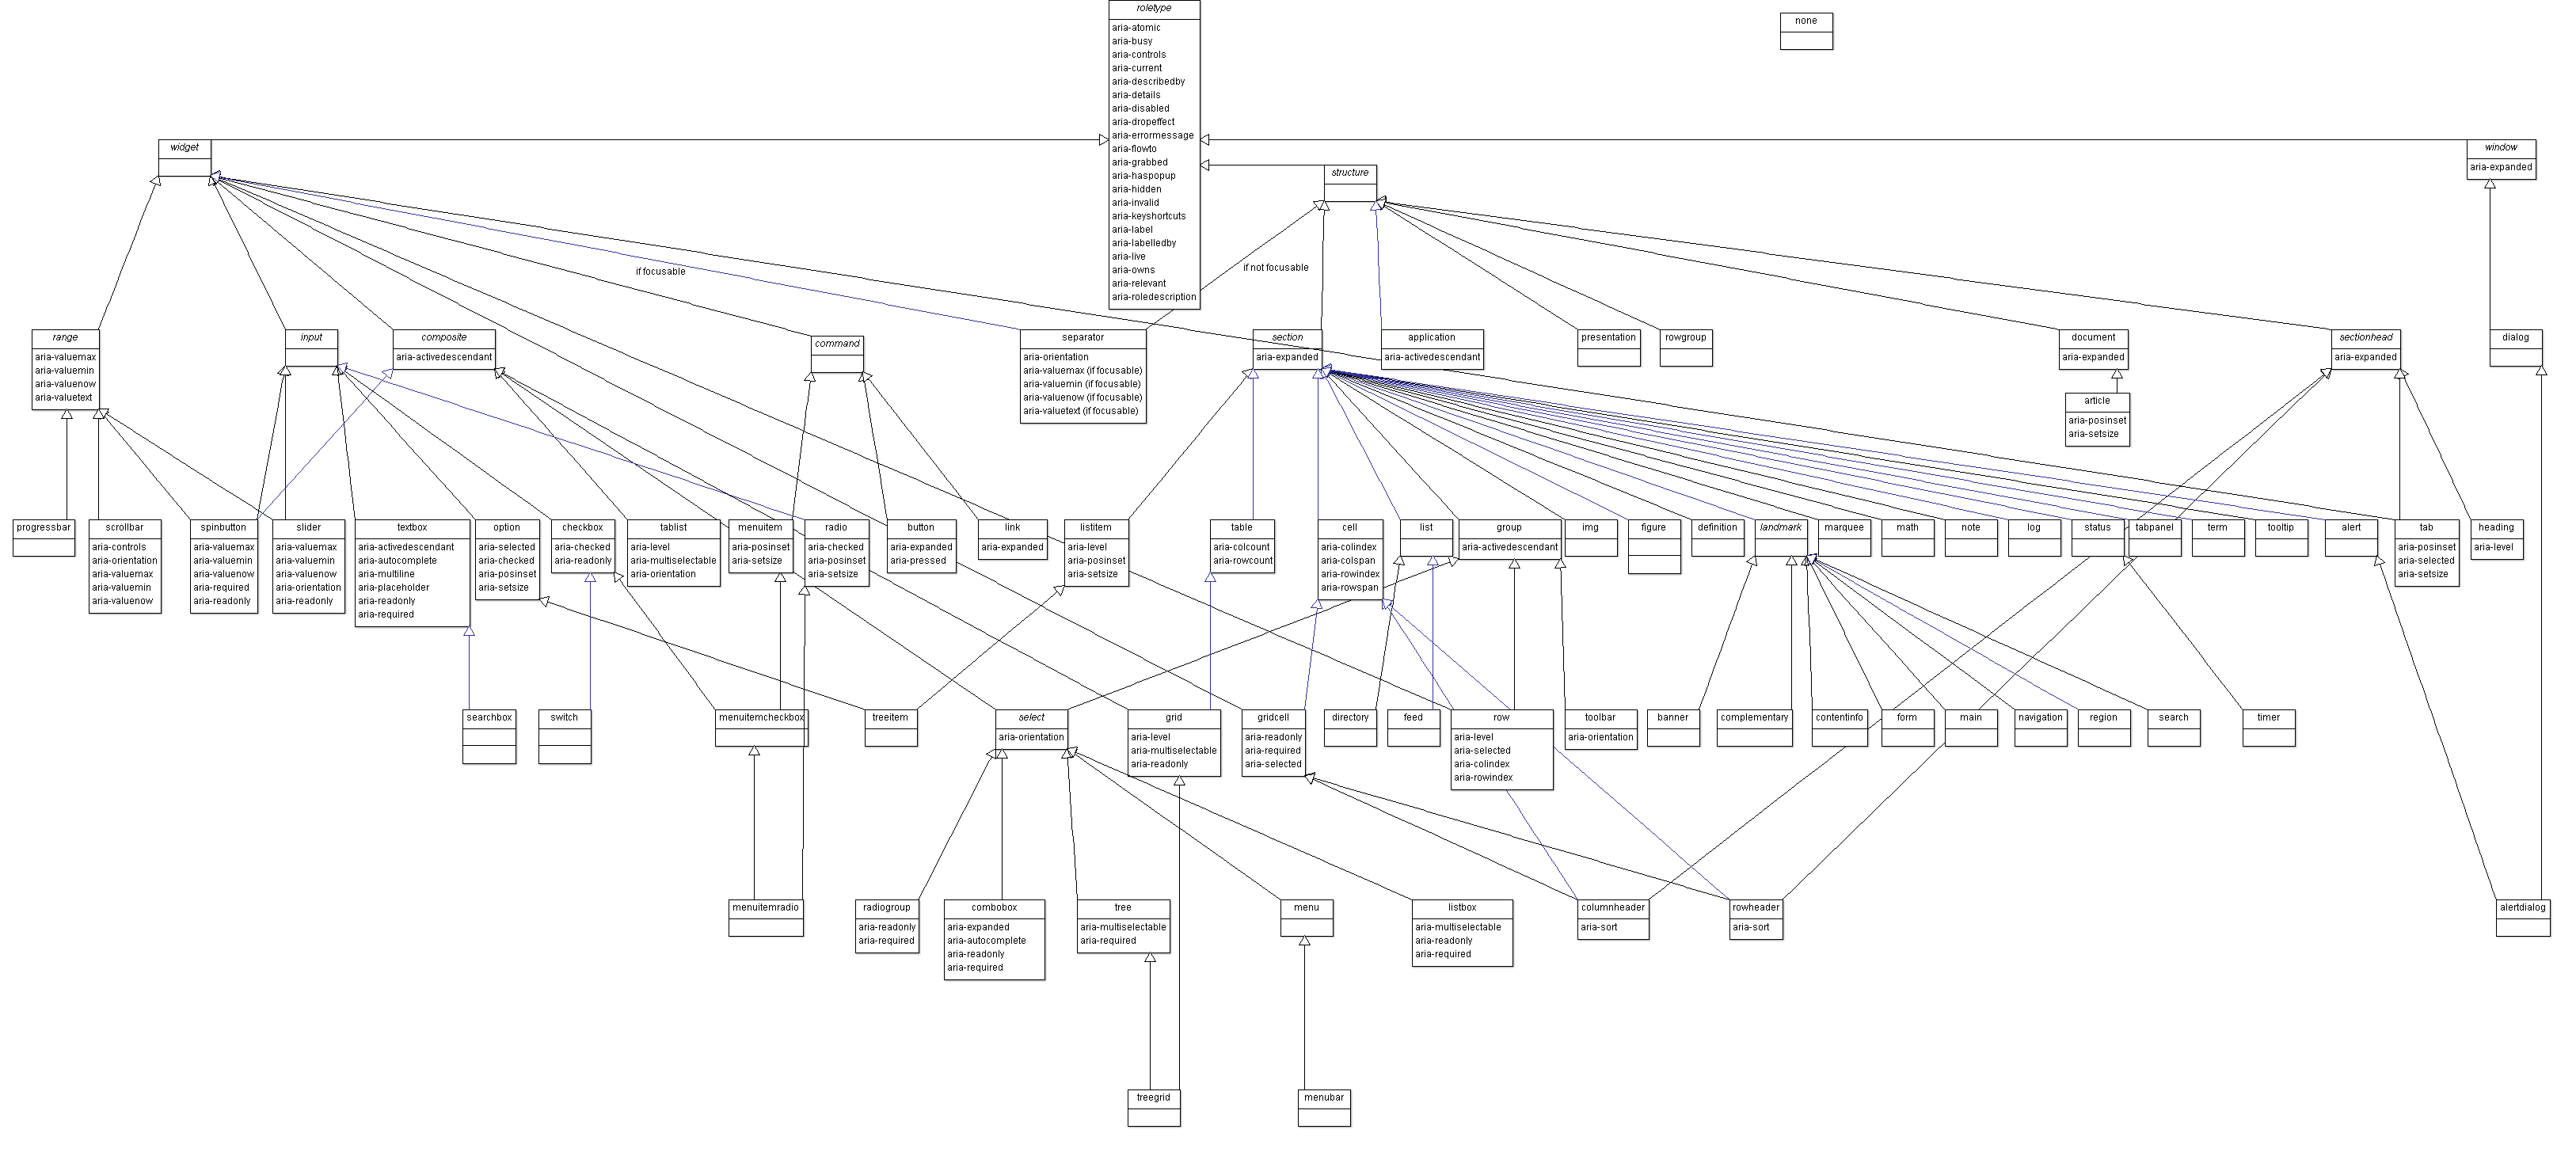 The WAI-ARIA taxonomy represented visually as an UML class diagram.